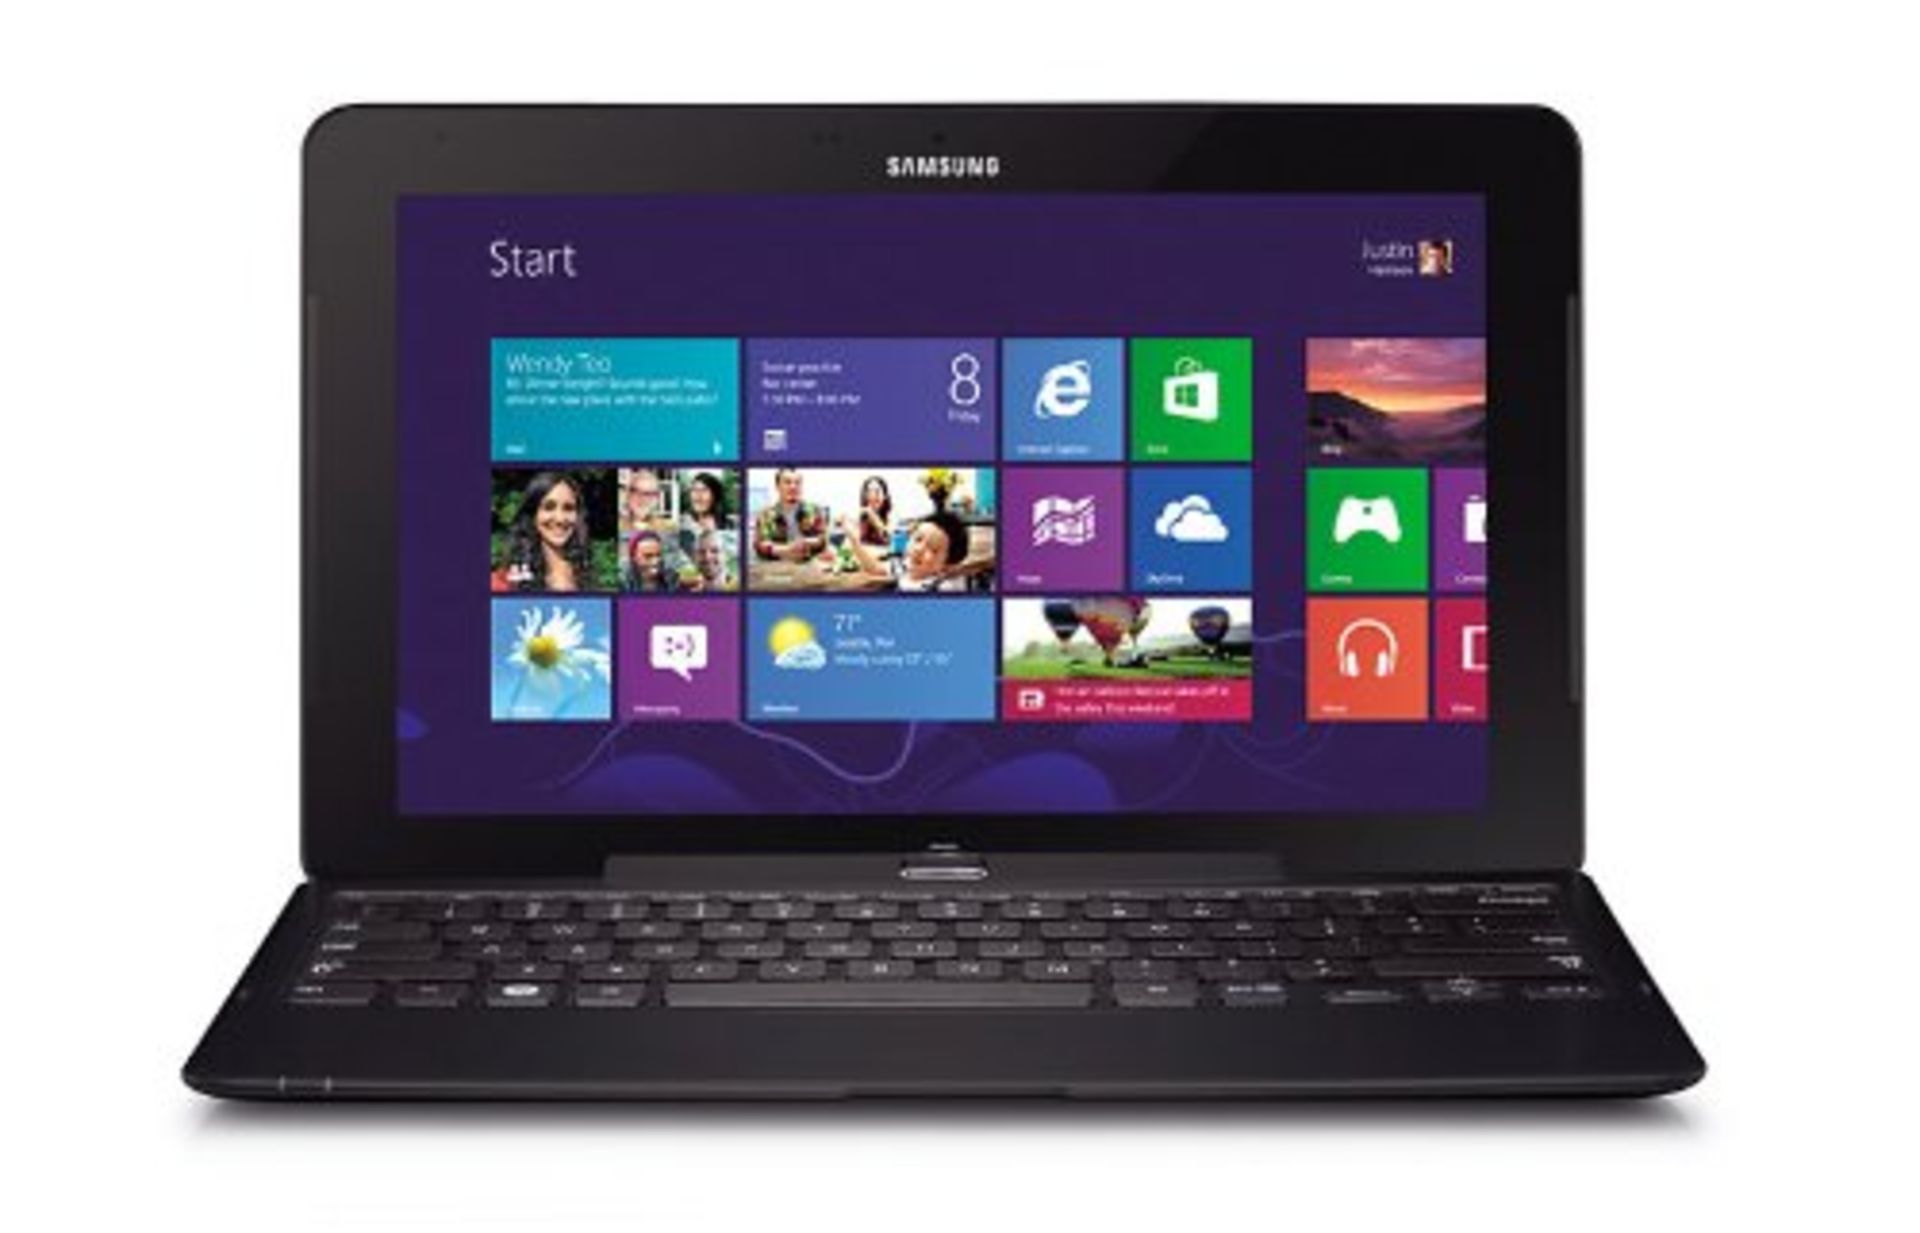 Lot of 1 Unit-Samsung ATIV Smart PC Pro - Tablet - with Keyboard Dock - Core I5 3317U / 1.7 Ghz -